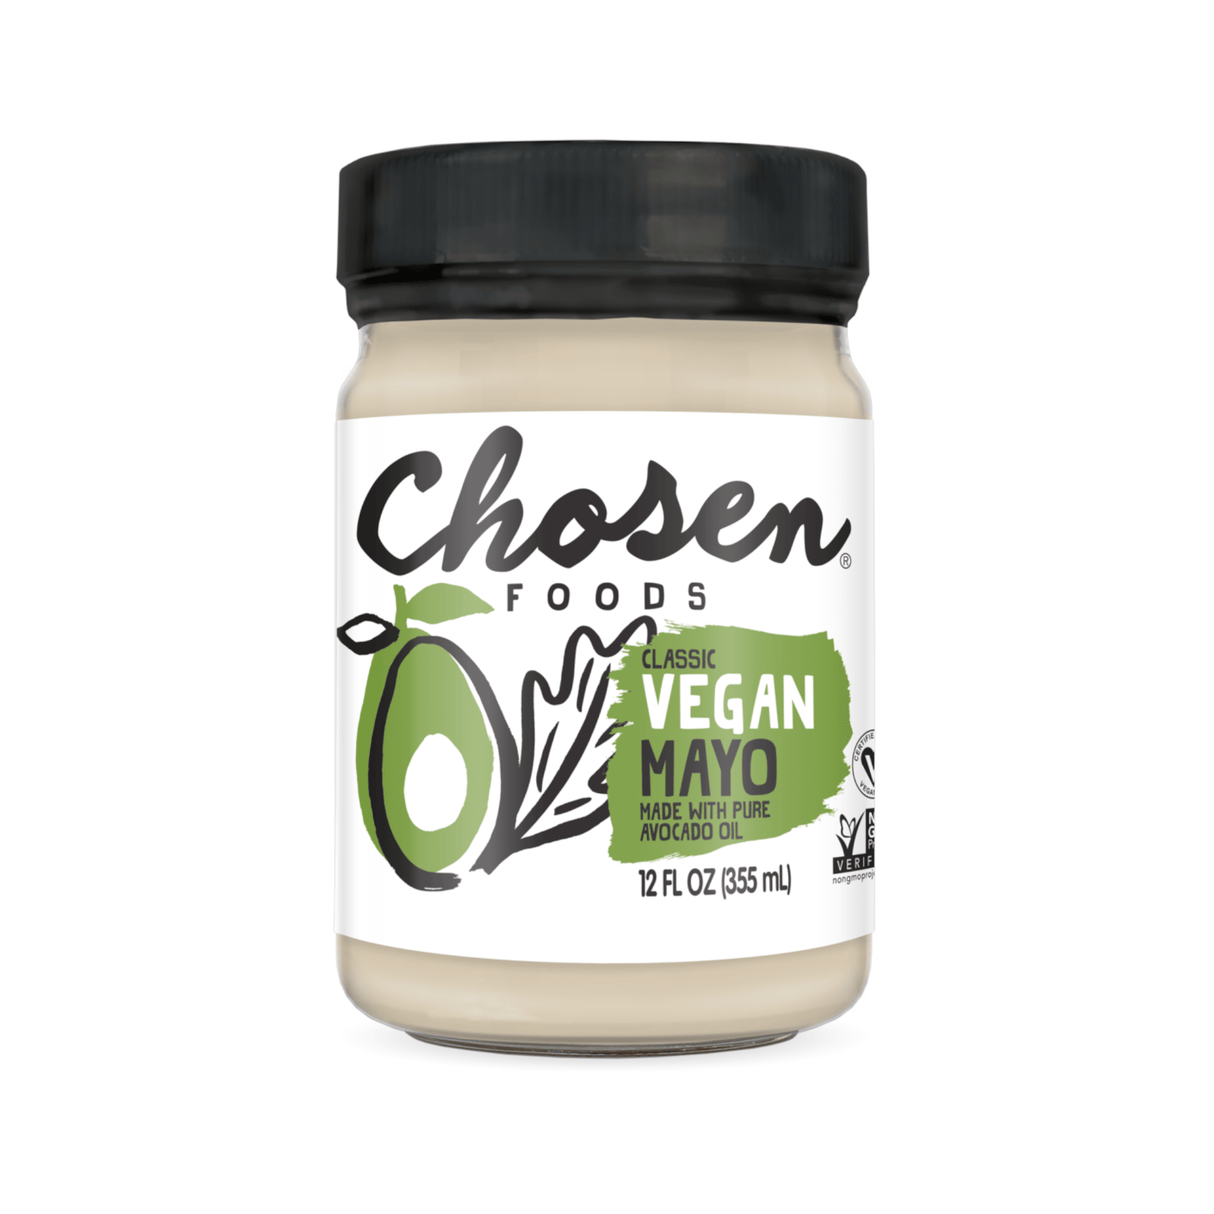 Chosen Foods Classic Vegan Mayo